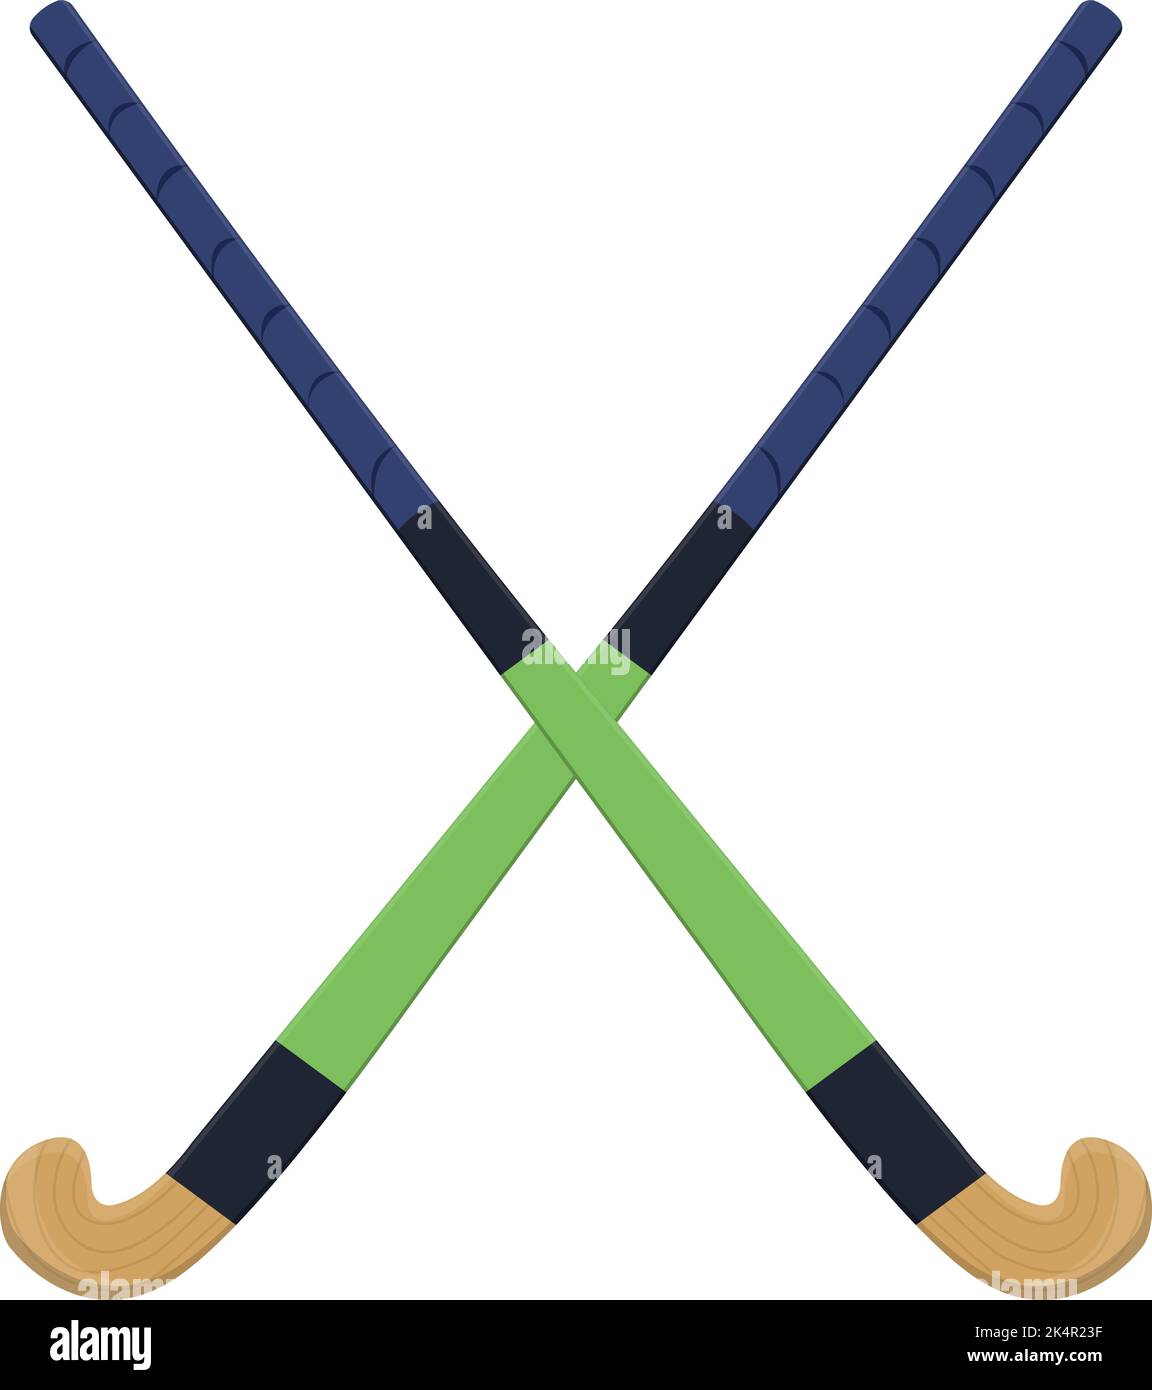 Environmentally Friendly, Hockey Equipment